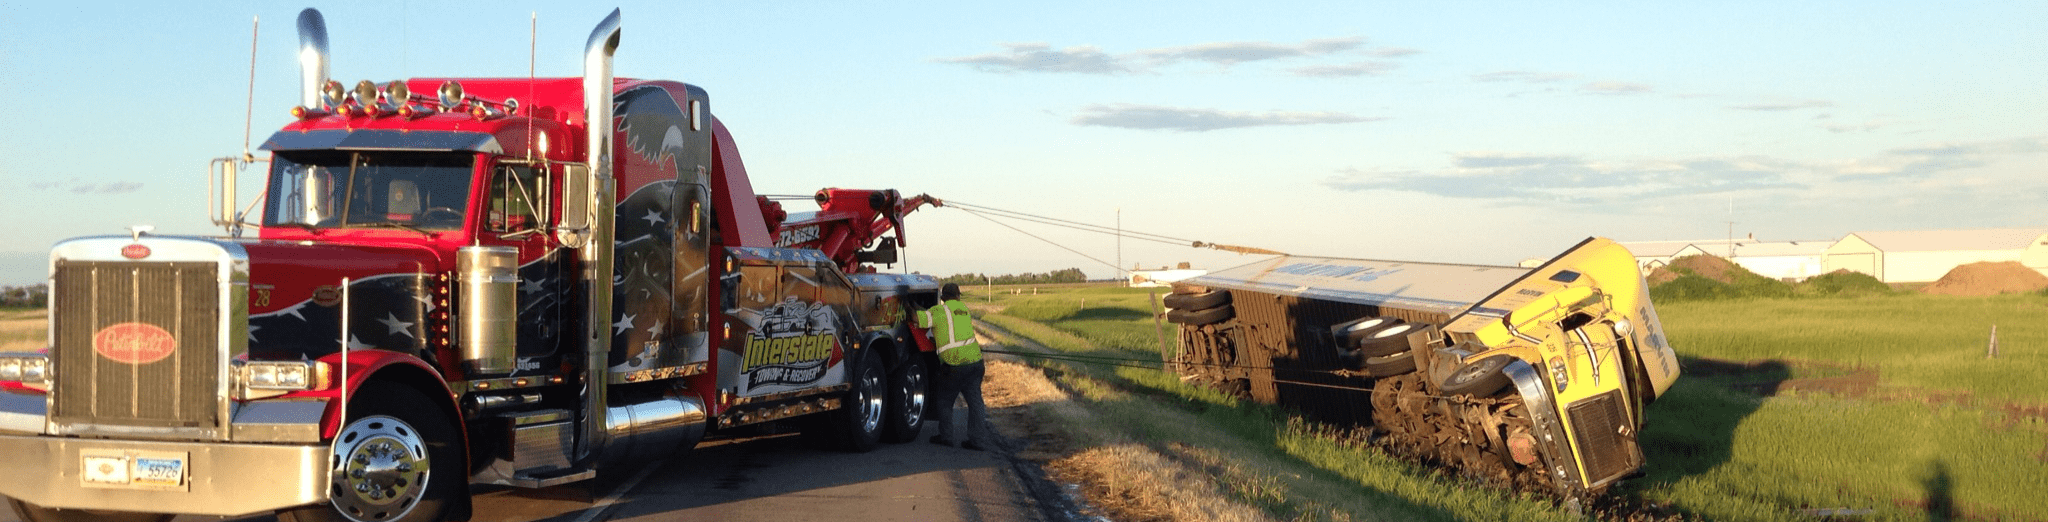 Interstate Towing Trucks-Shrunk